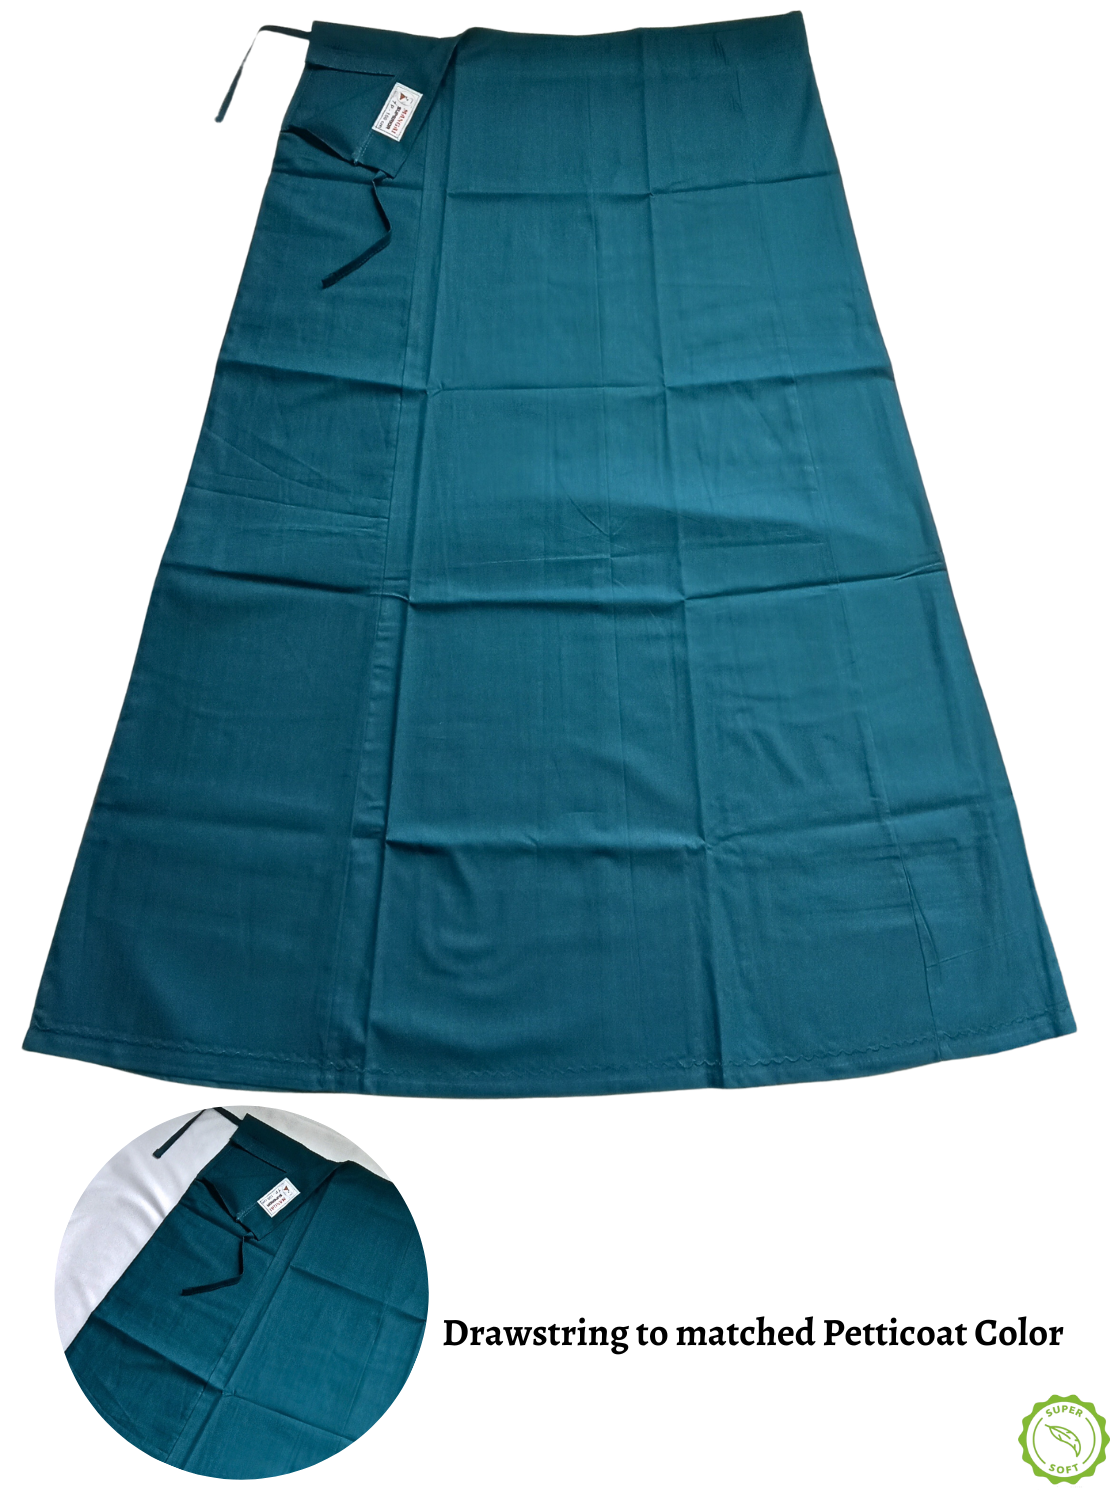 MANGAI Premium Embroidery Superior Cotton Petticoats - 7 Part Multiple Color's